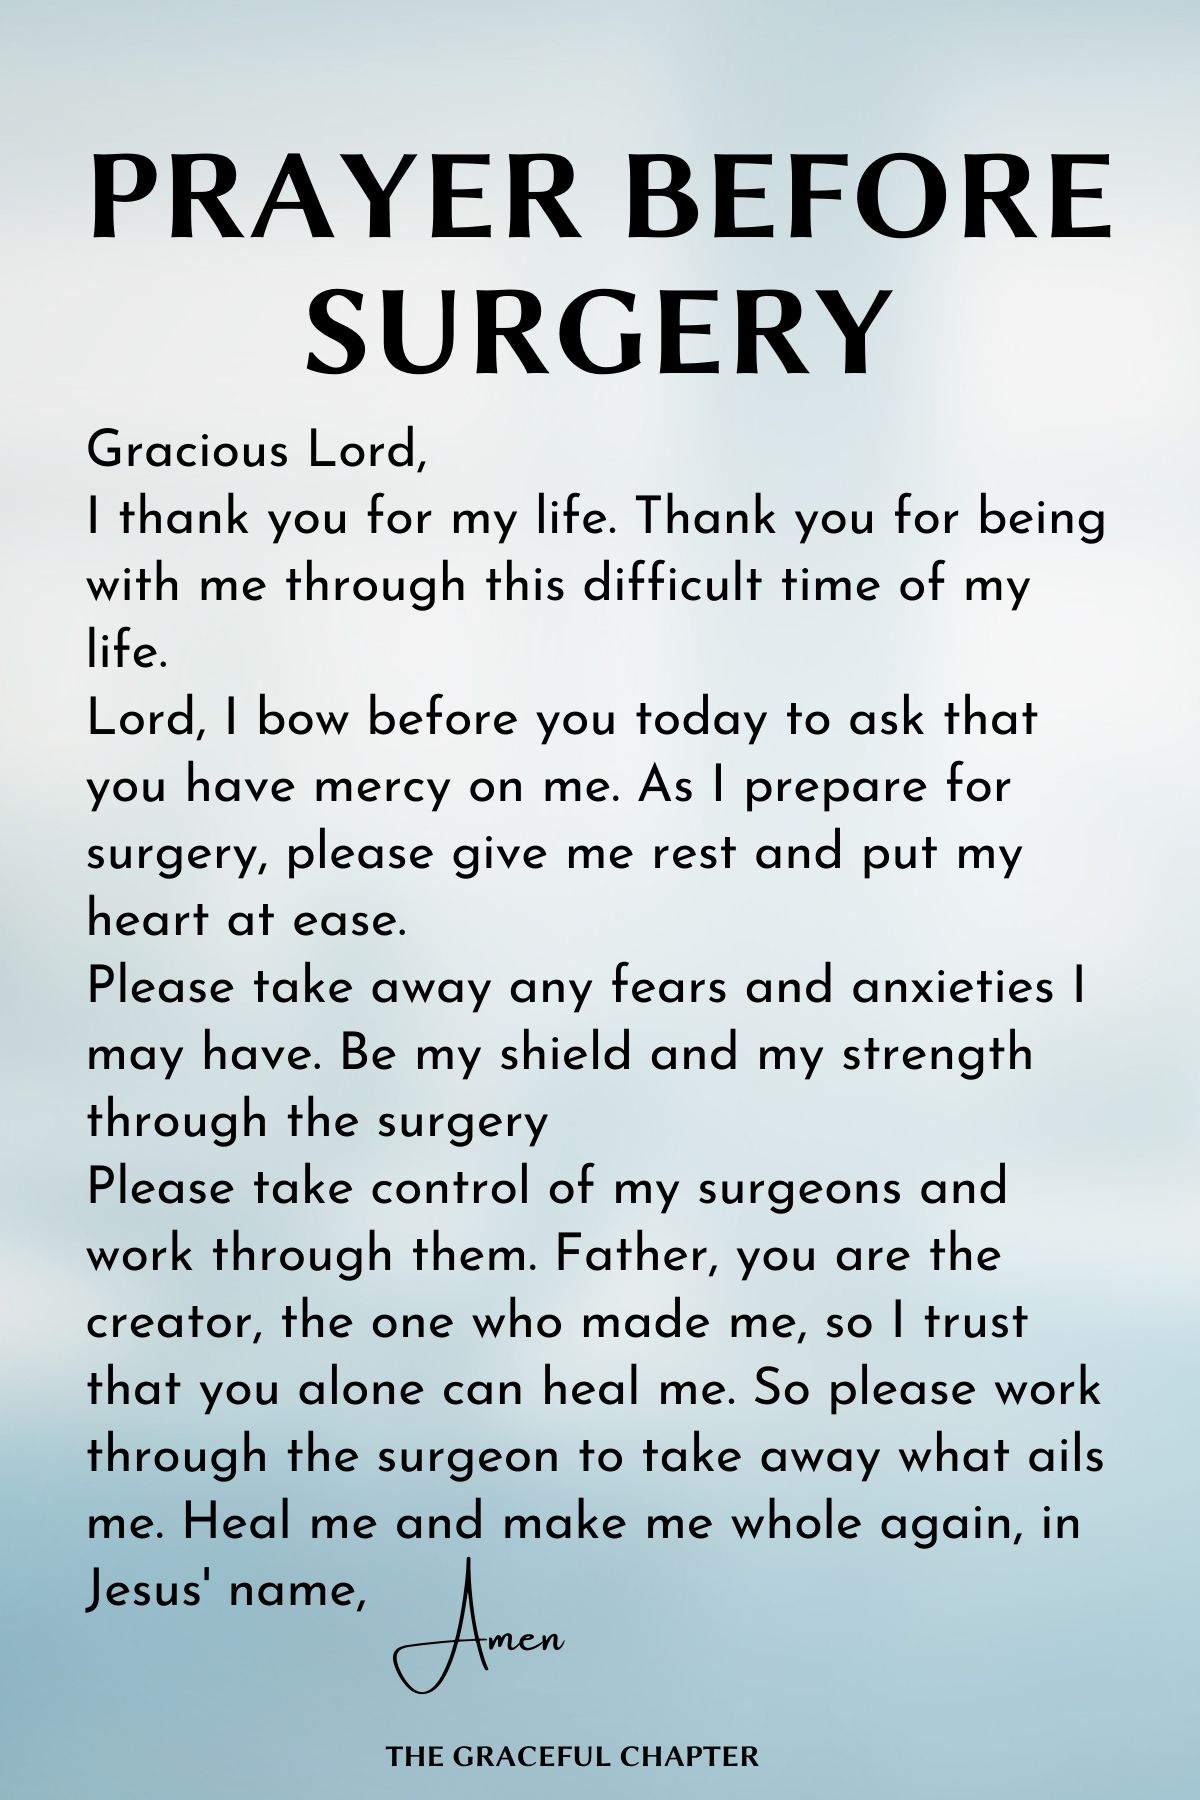 Prayer before surgery